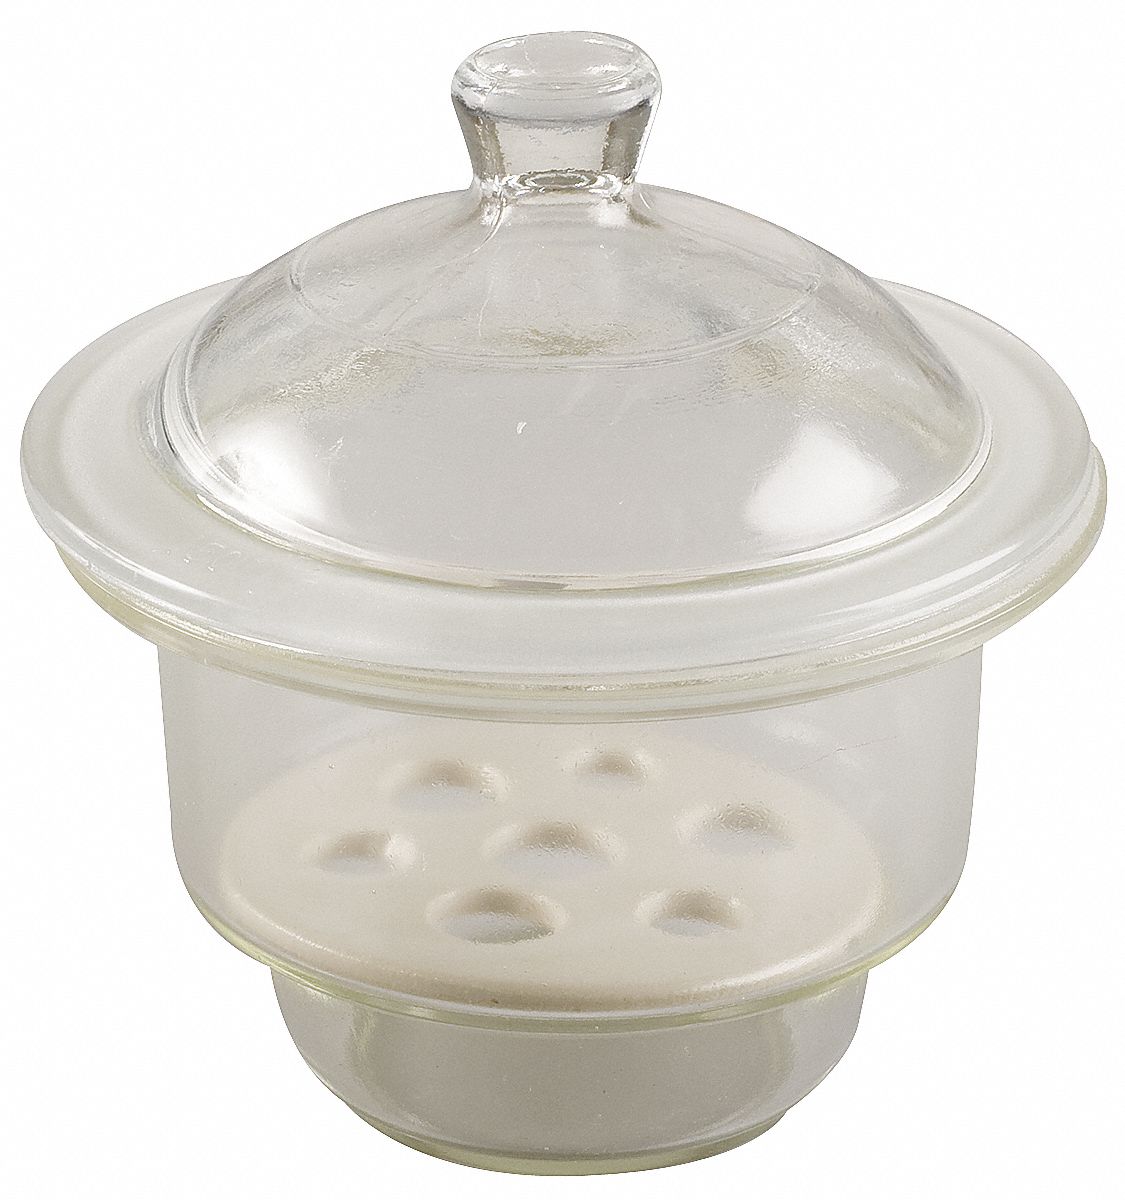 Pack of 1 Lab Desiccator with Porcelain Plate,210mm/8.27inch Adamas-Beta Amber Glass Desiccator Jar